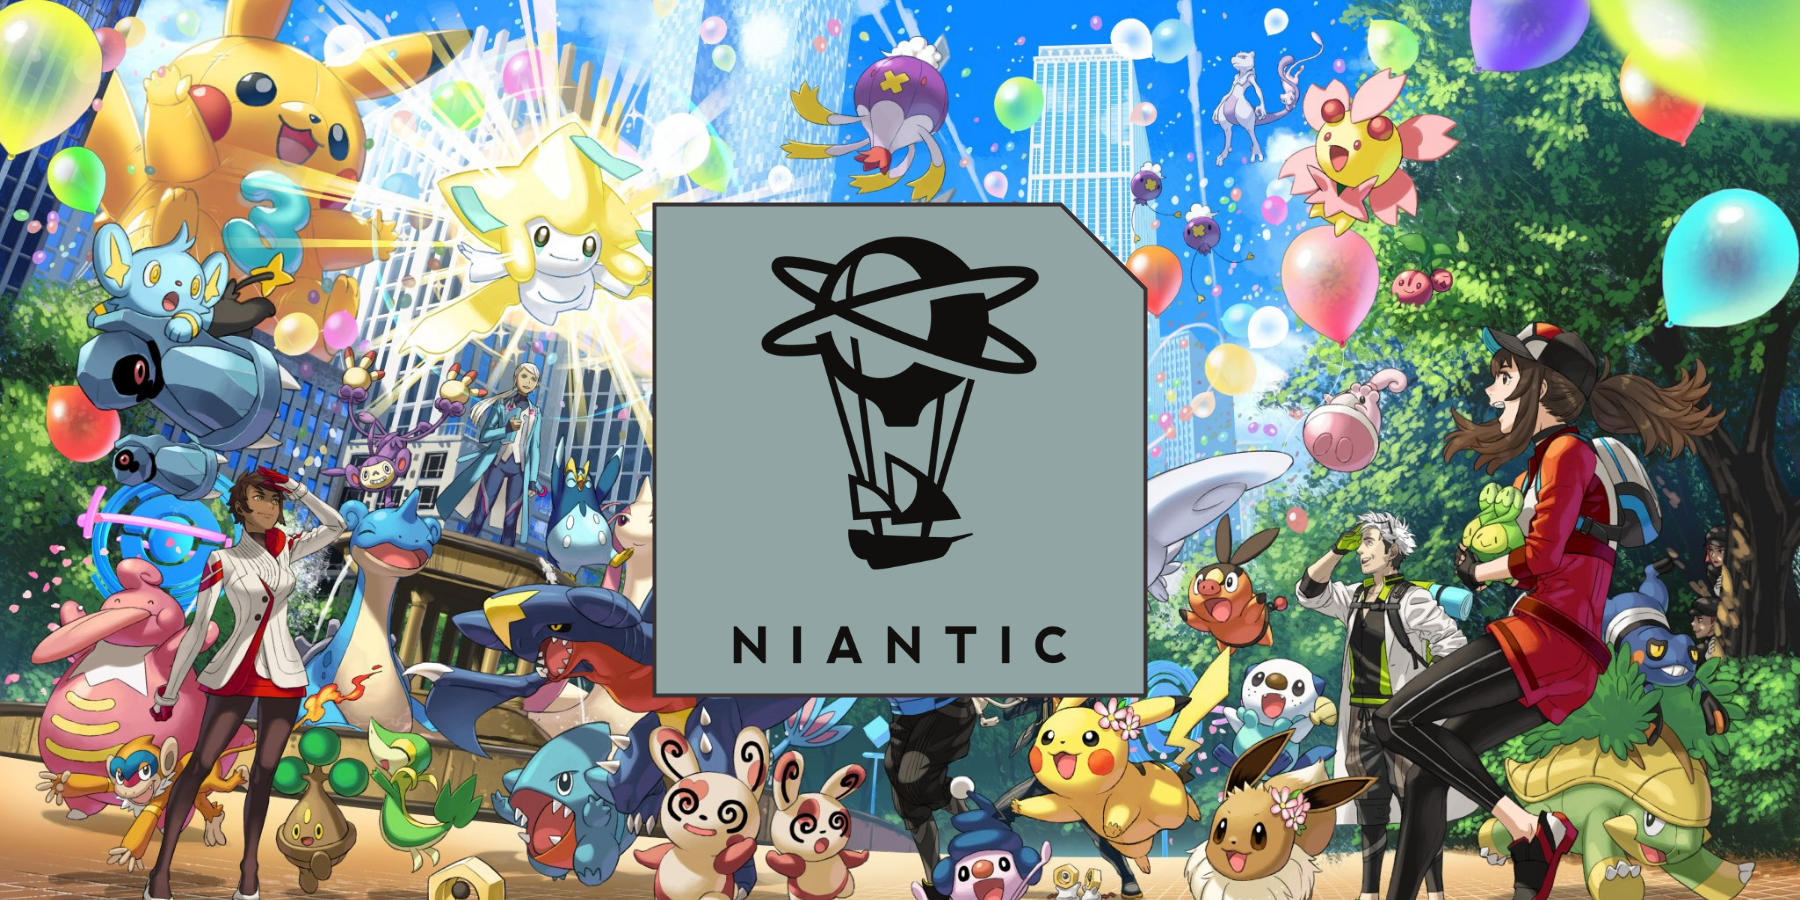 pokemon go background, with niantic logo overtop